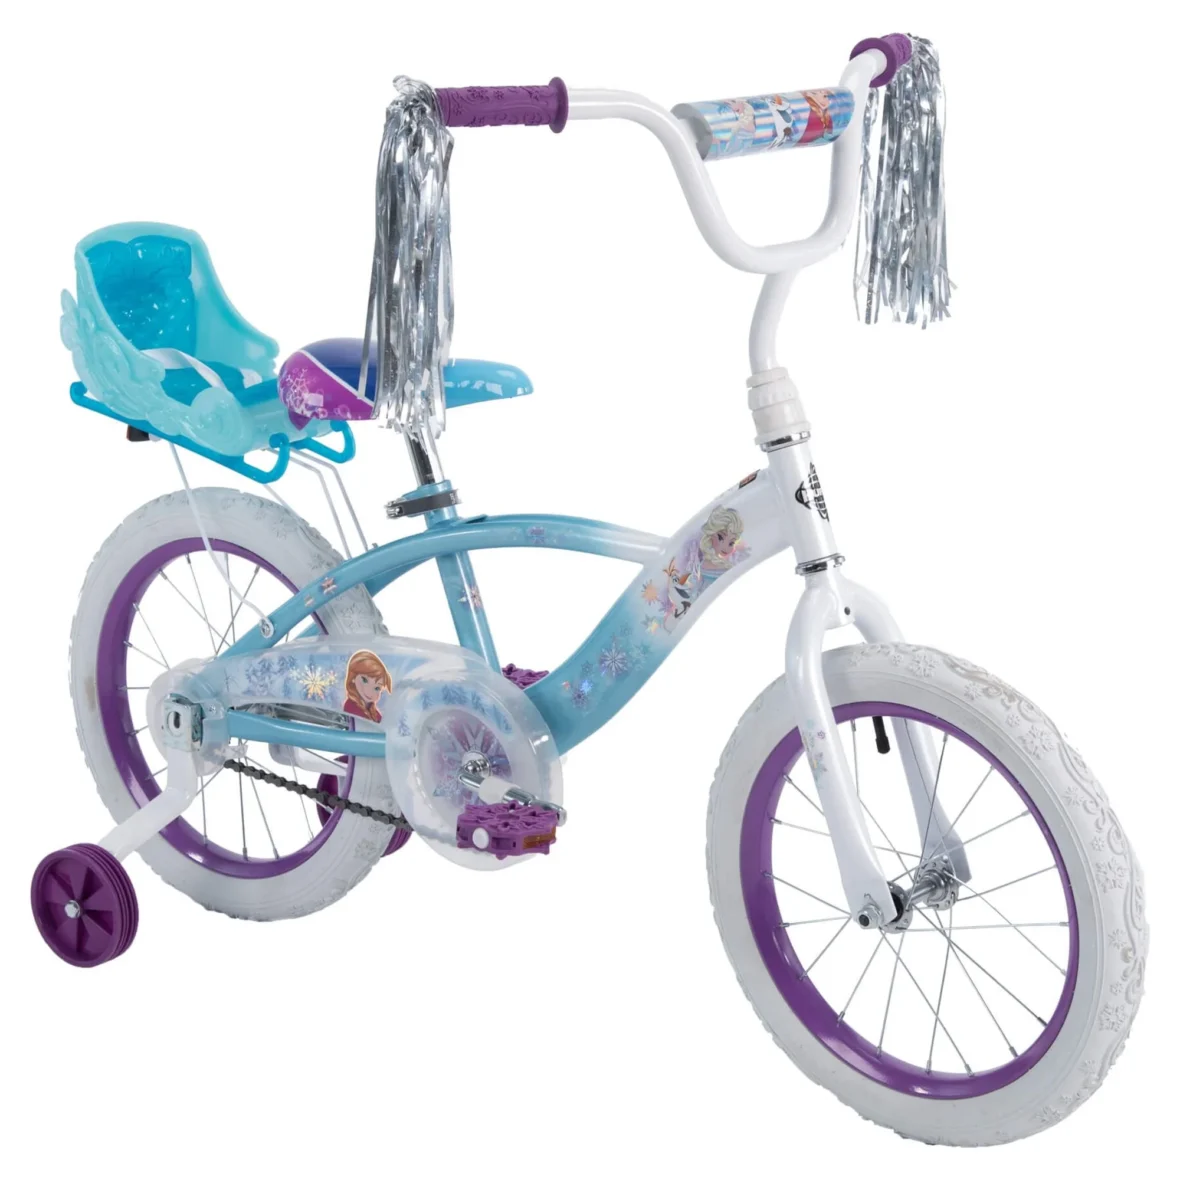 Disney Frozen 16-inch Girls’ Bike, Ages 4+ Years, by Huffy